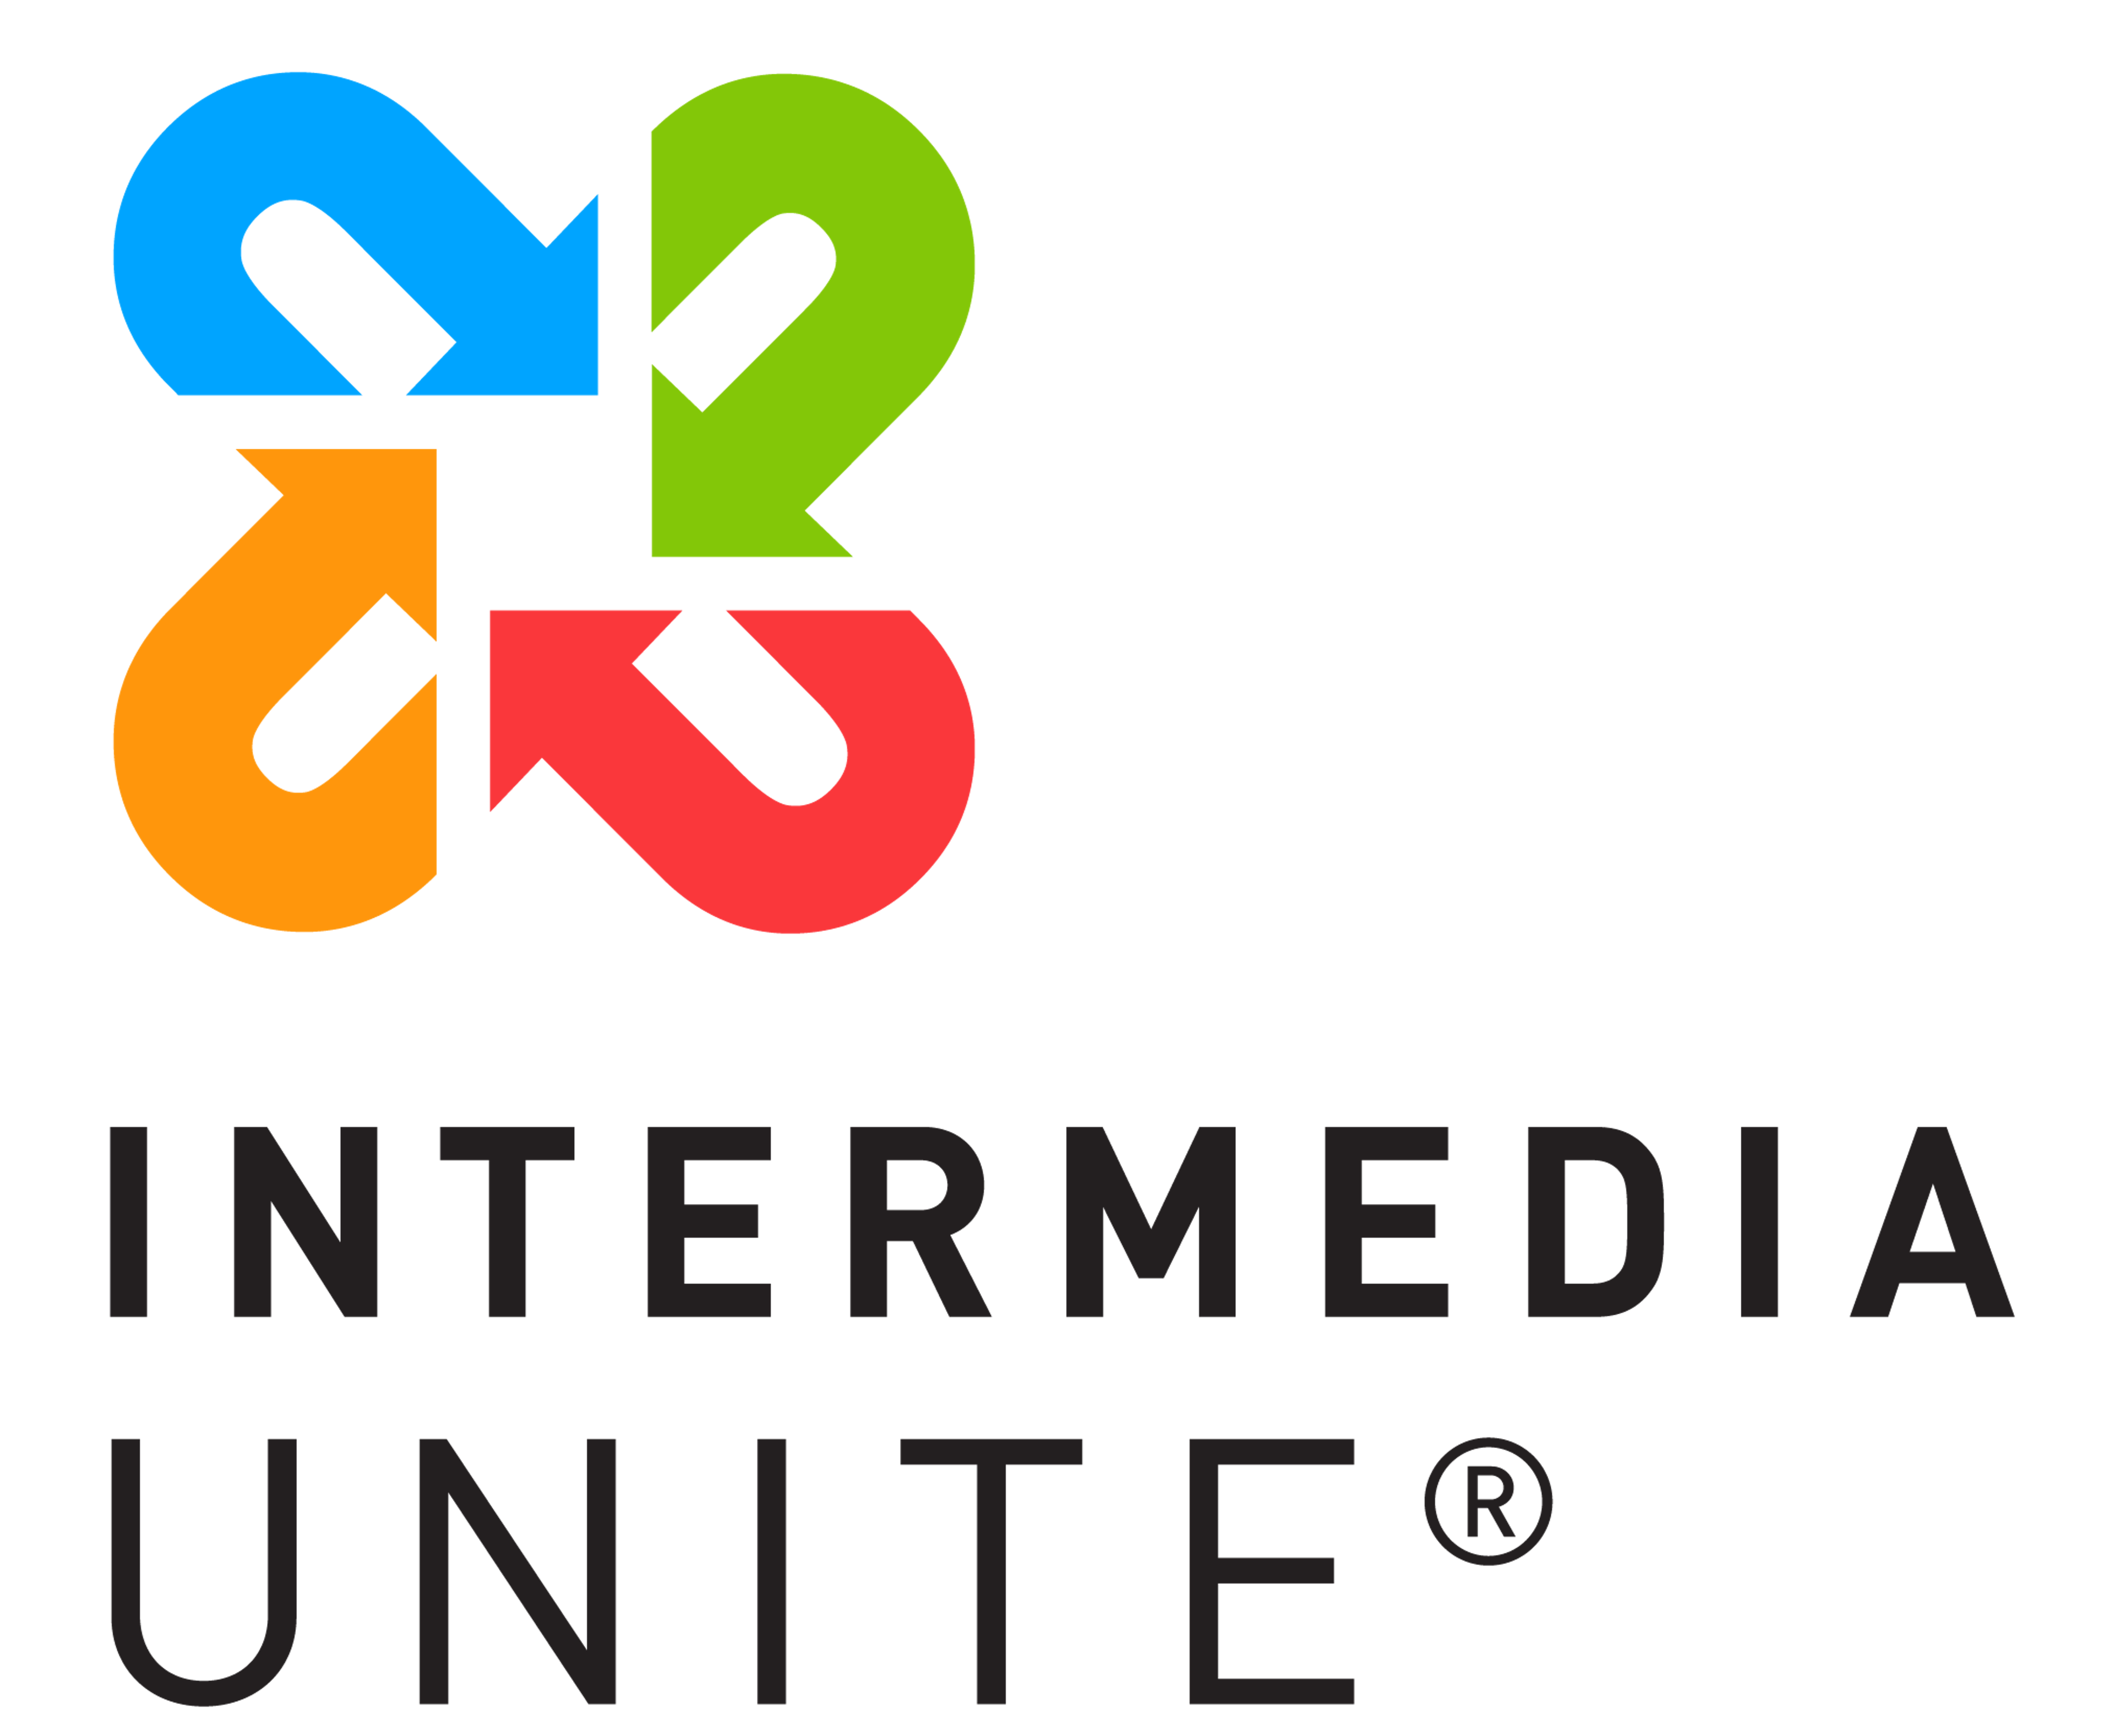 Intermedia Unite Logo